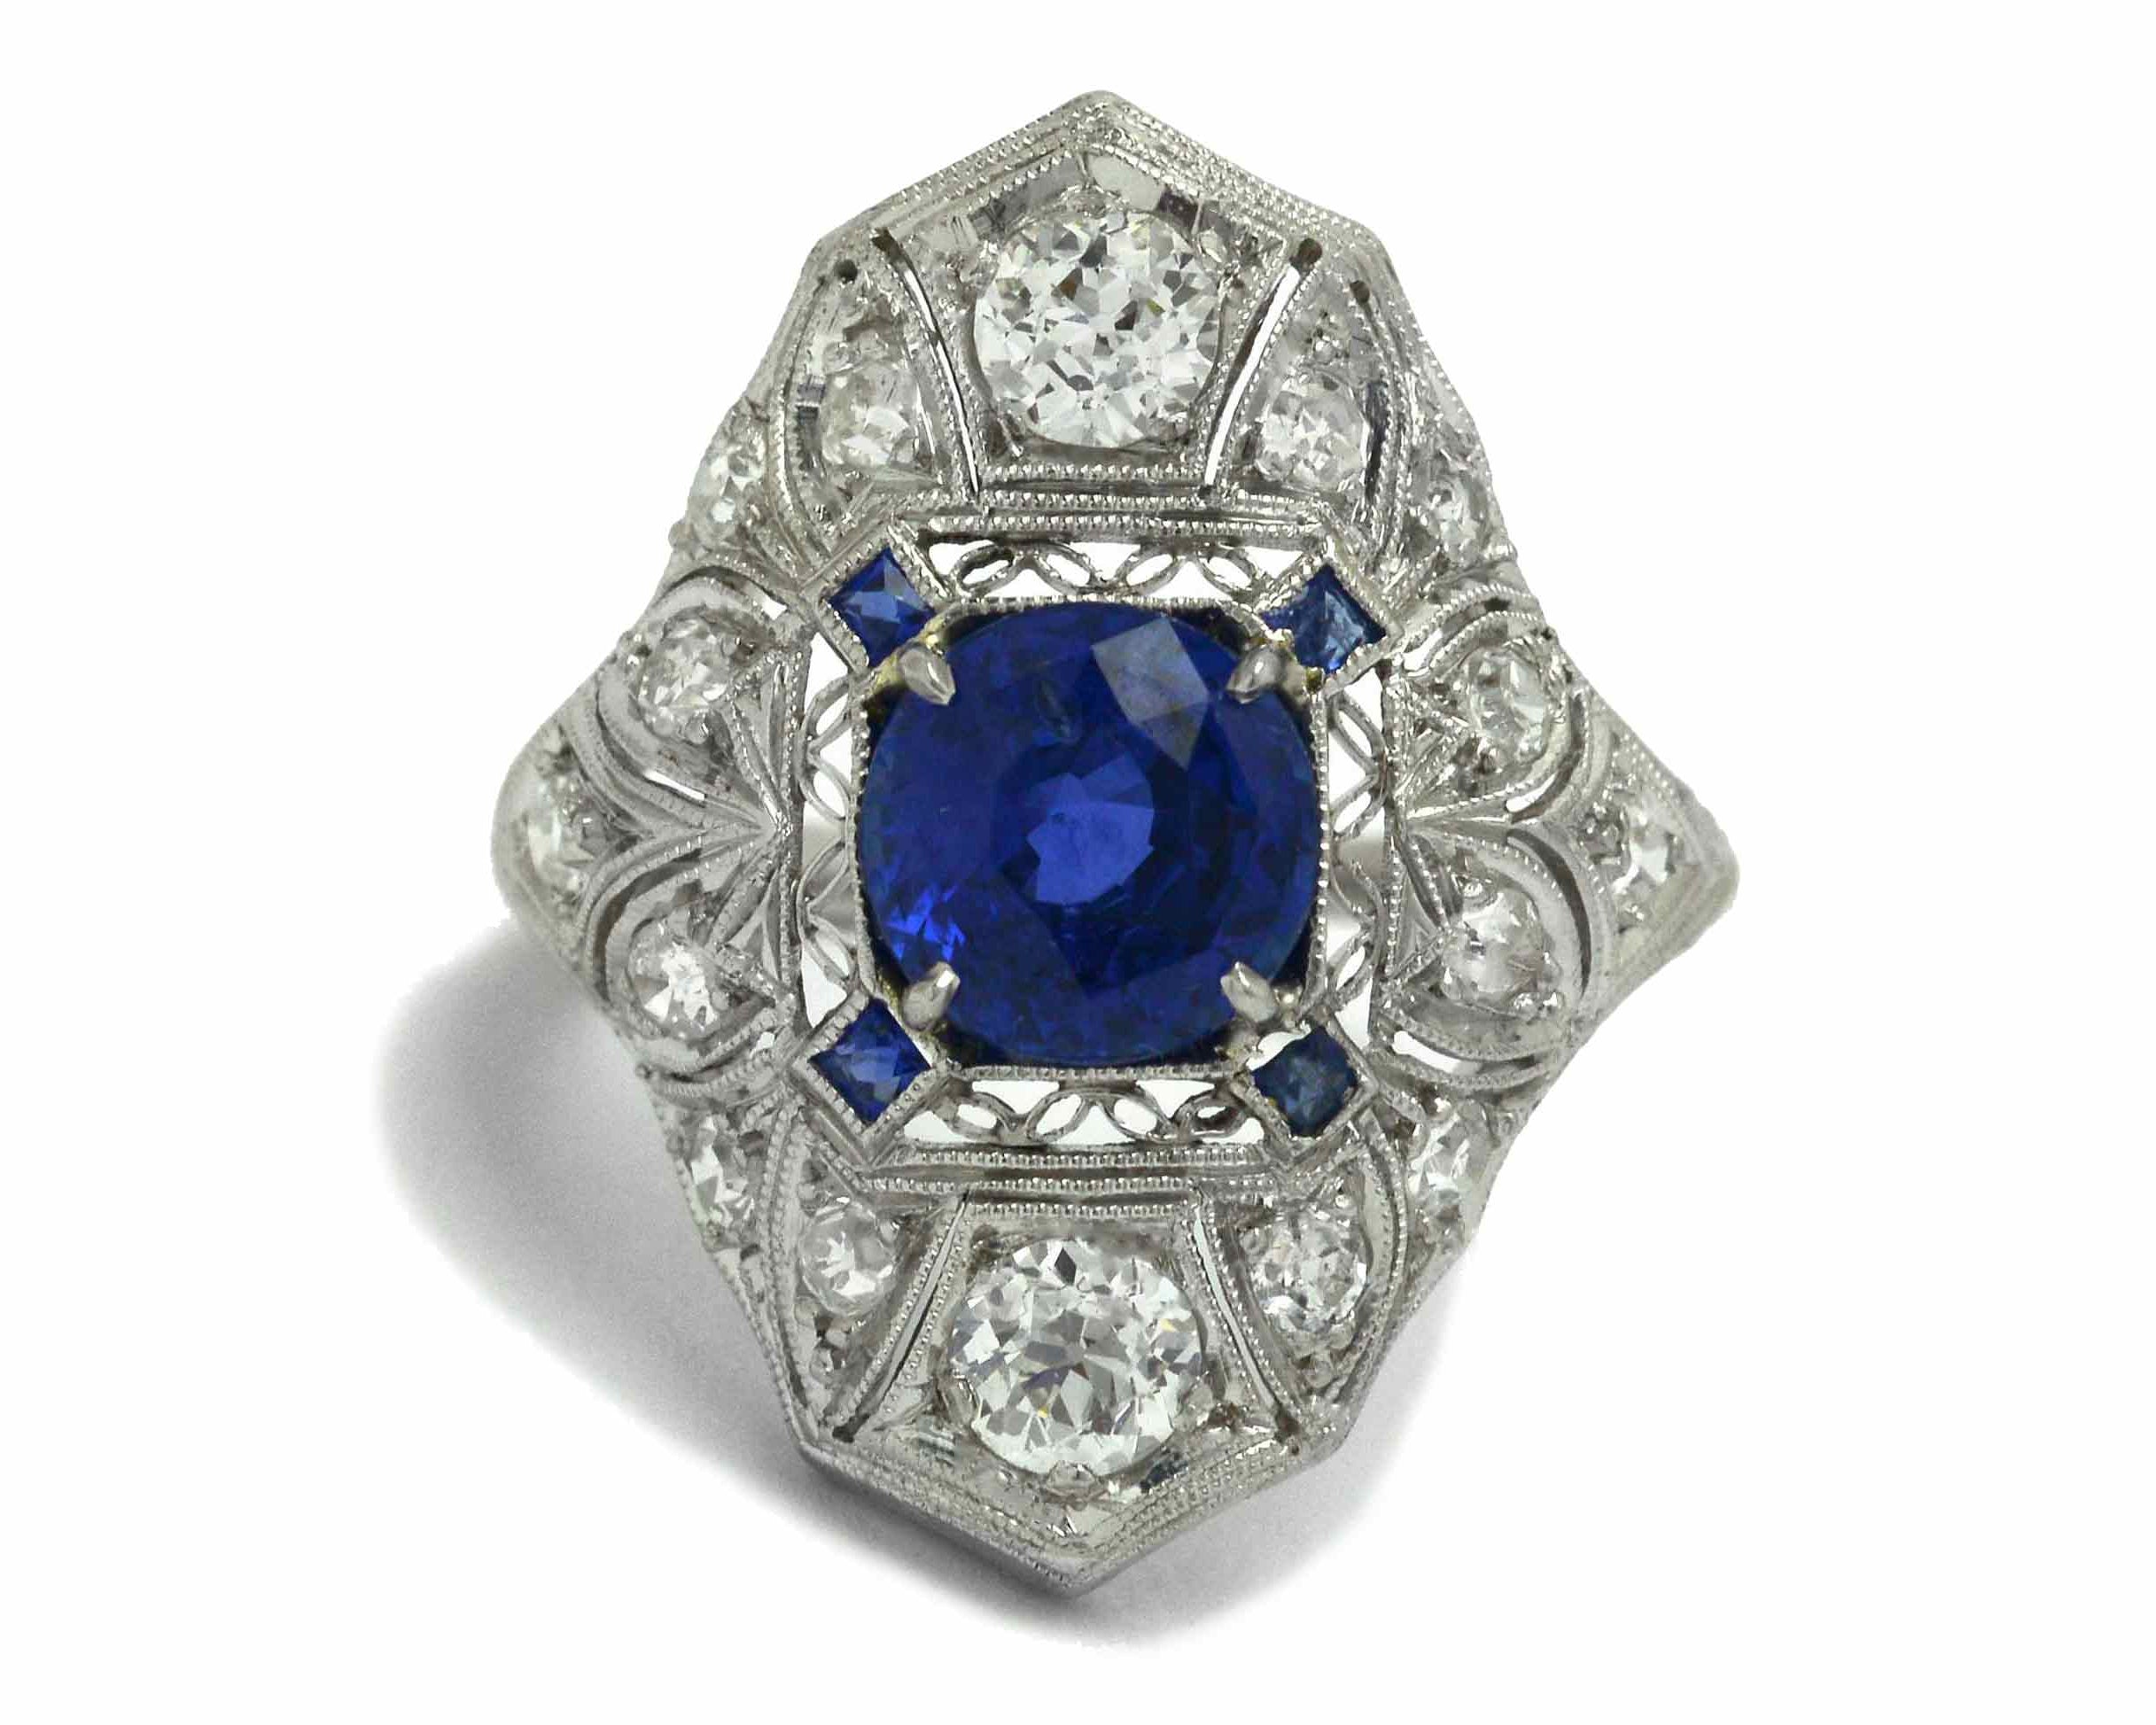 2 carat round blue sapphire diamond, large engagement ring.